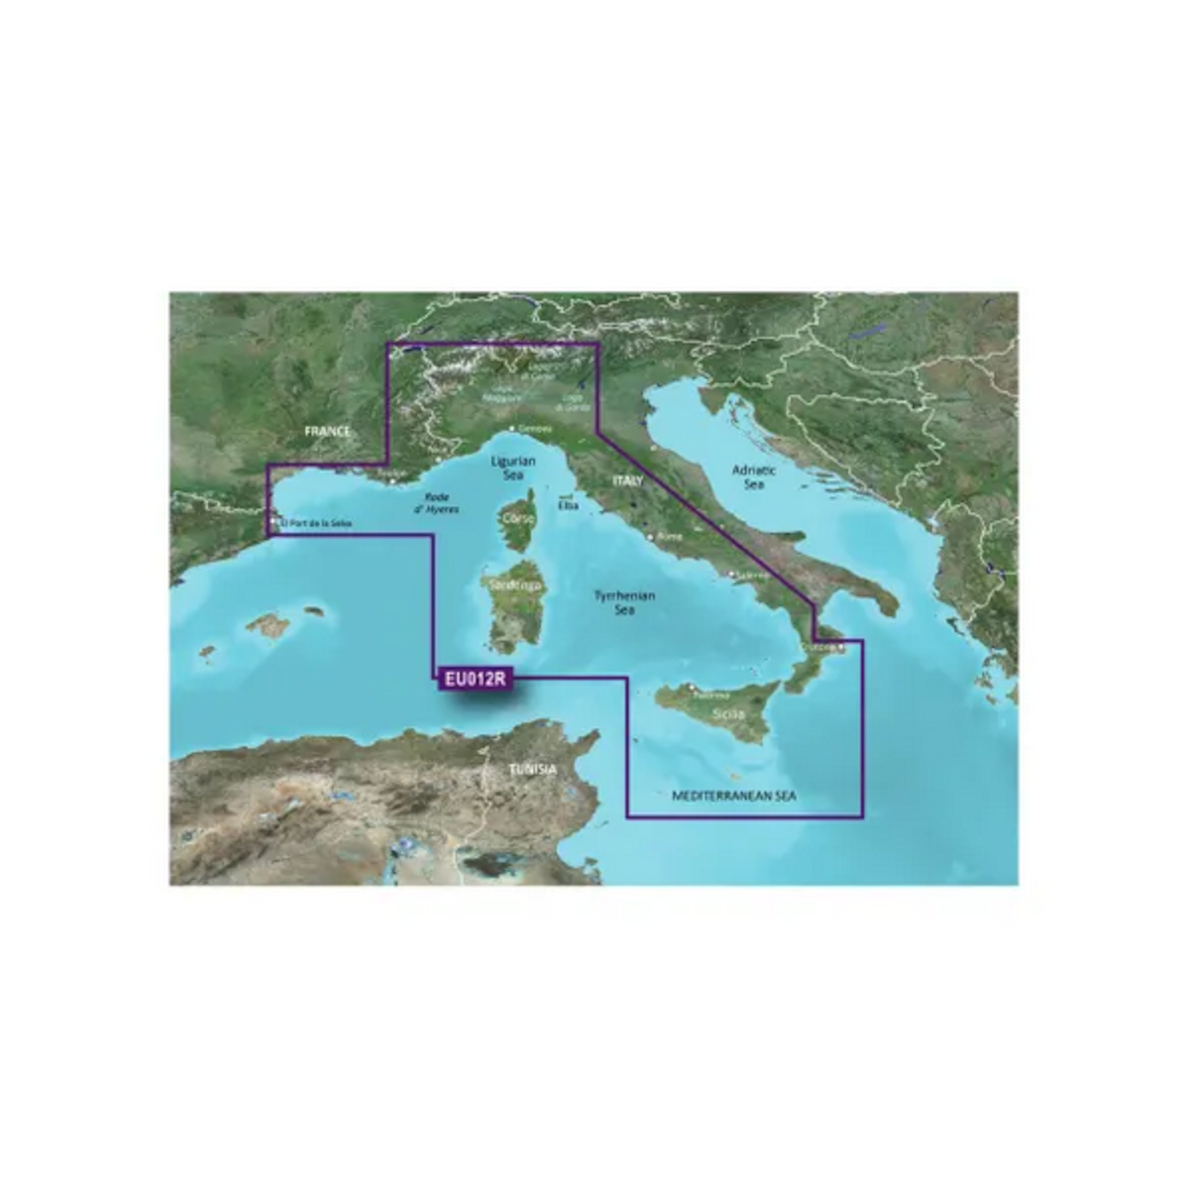 Garmin VEU012R zeekaart Middellandse Zee, Italiaanse westkust